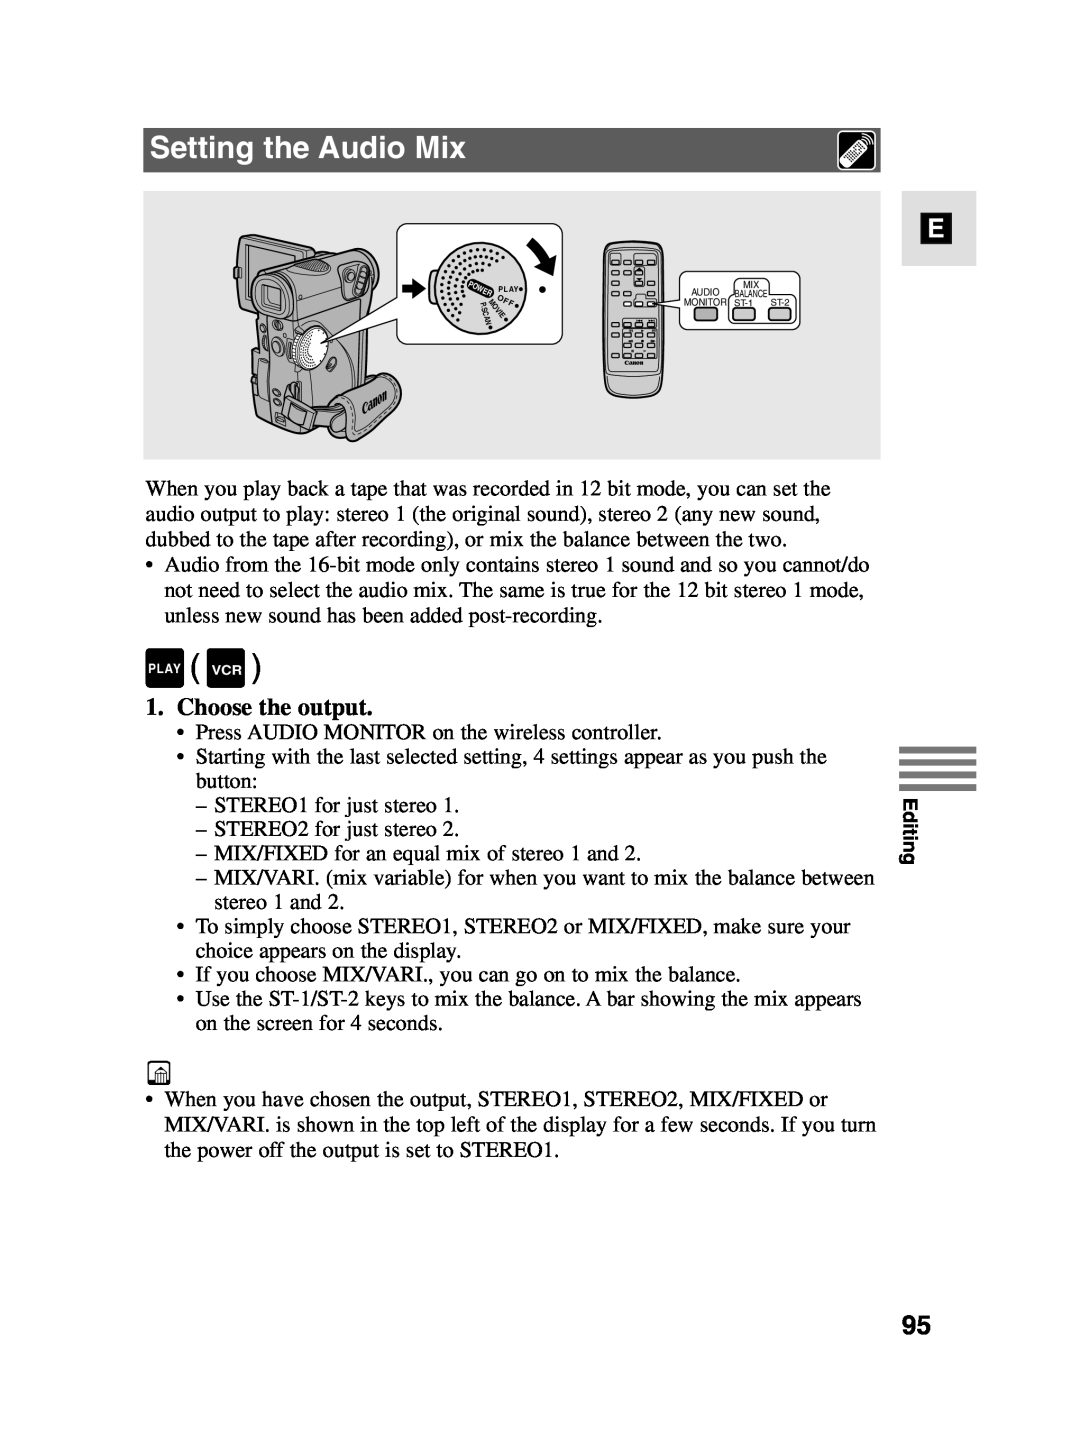 Canon MV4i MC instruction manual Setting the Audio Mix, Choose the output 